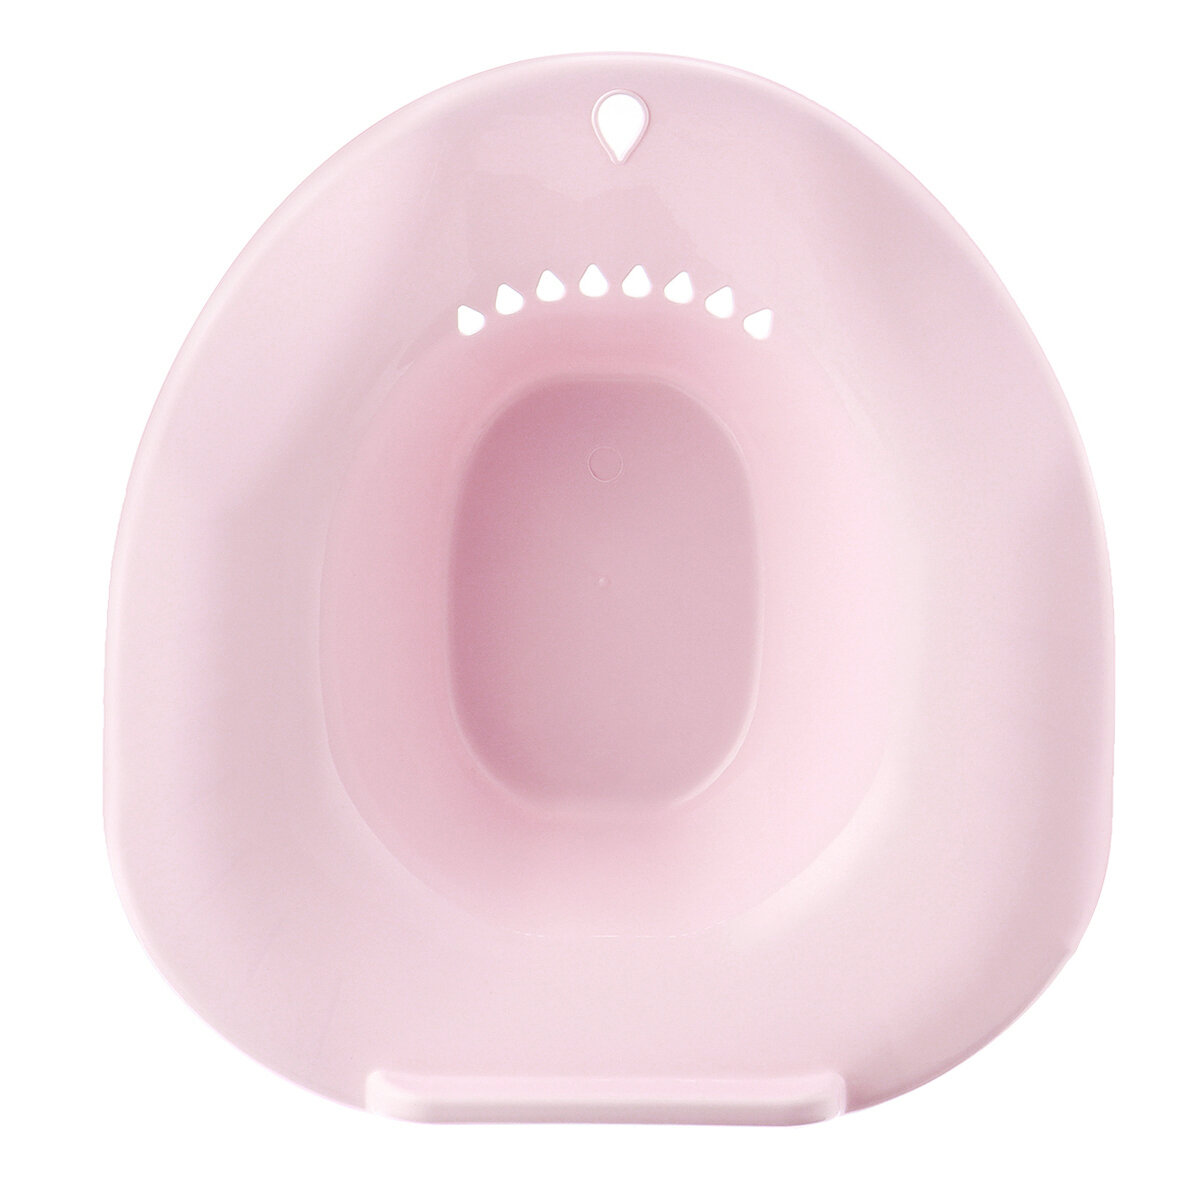 

Toilet Seat Yoni Remove Gynecological Inflammation Steam Vaginal Bidet Basin